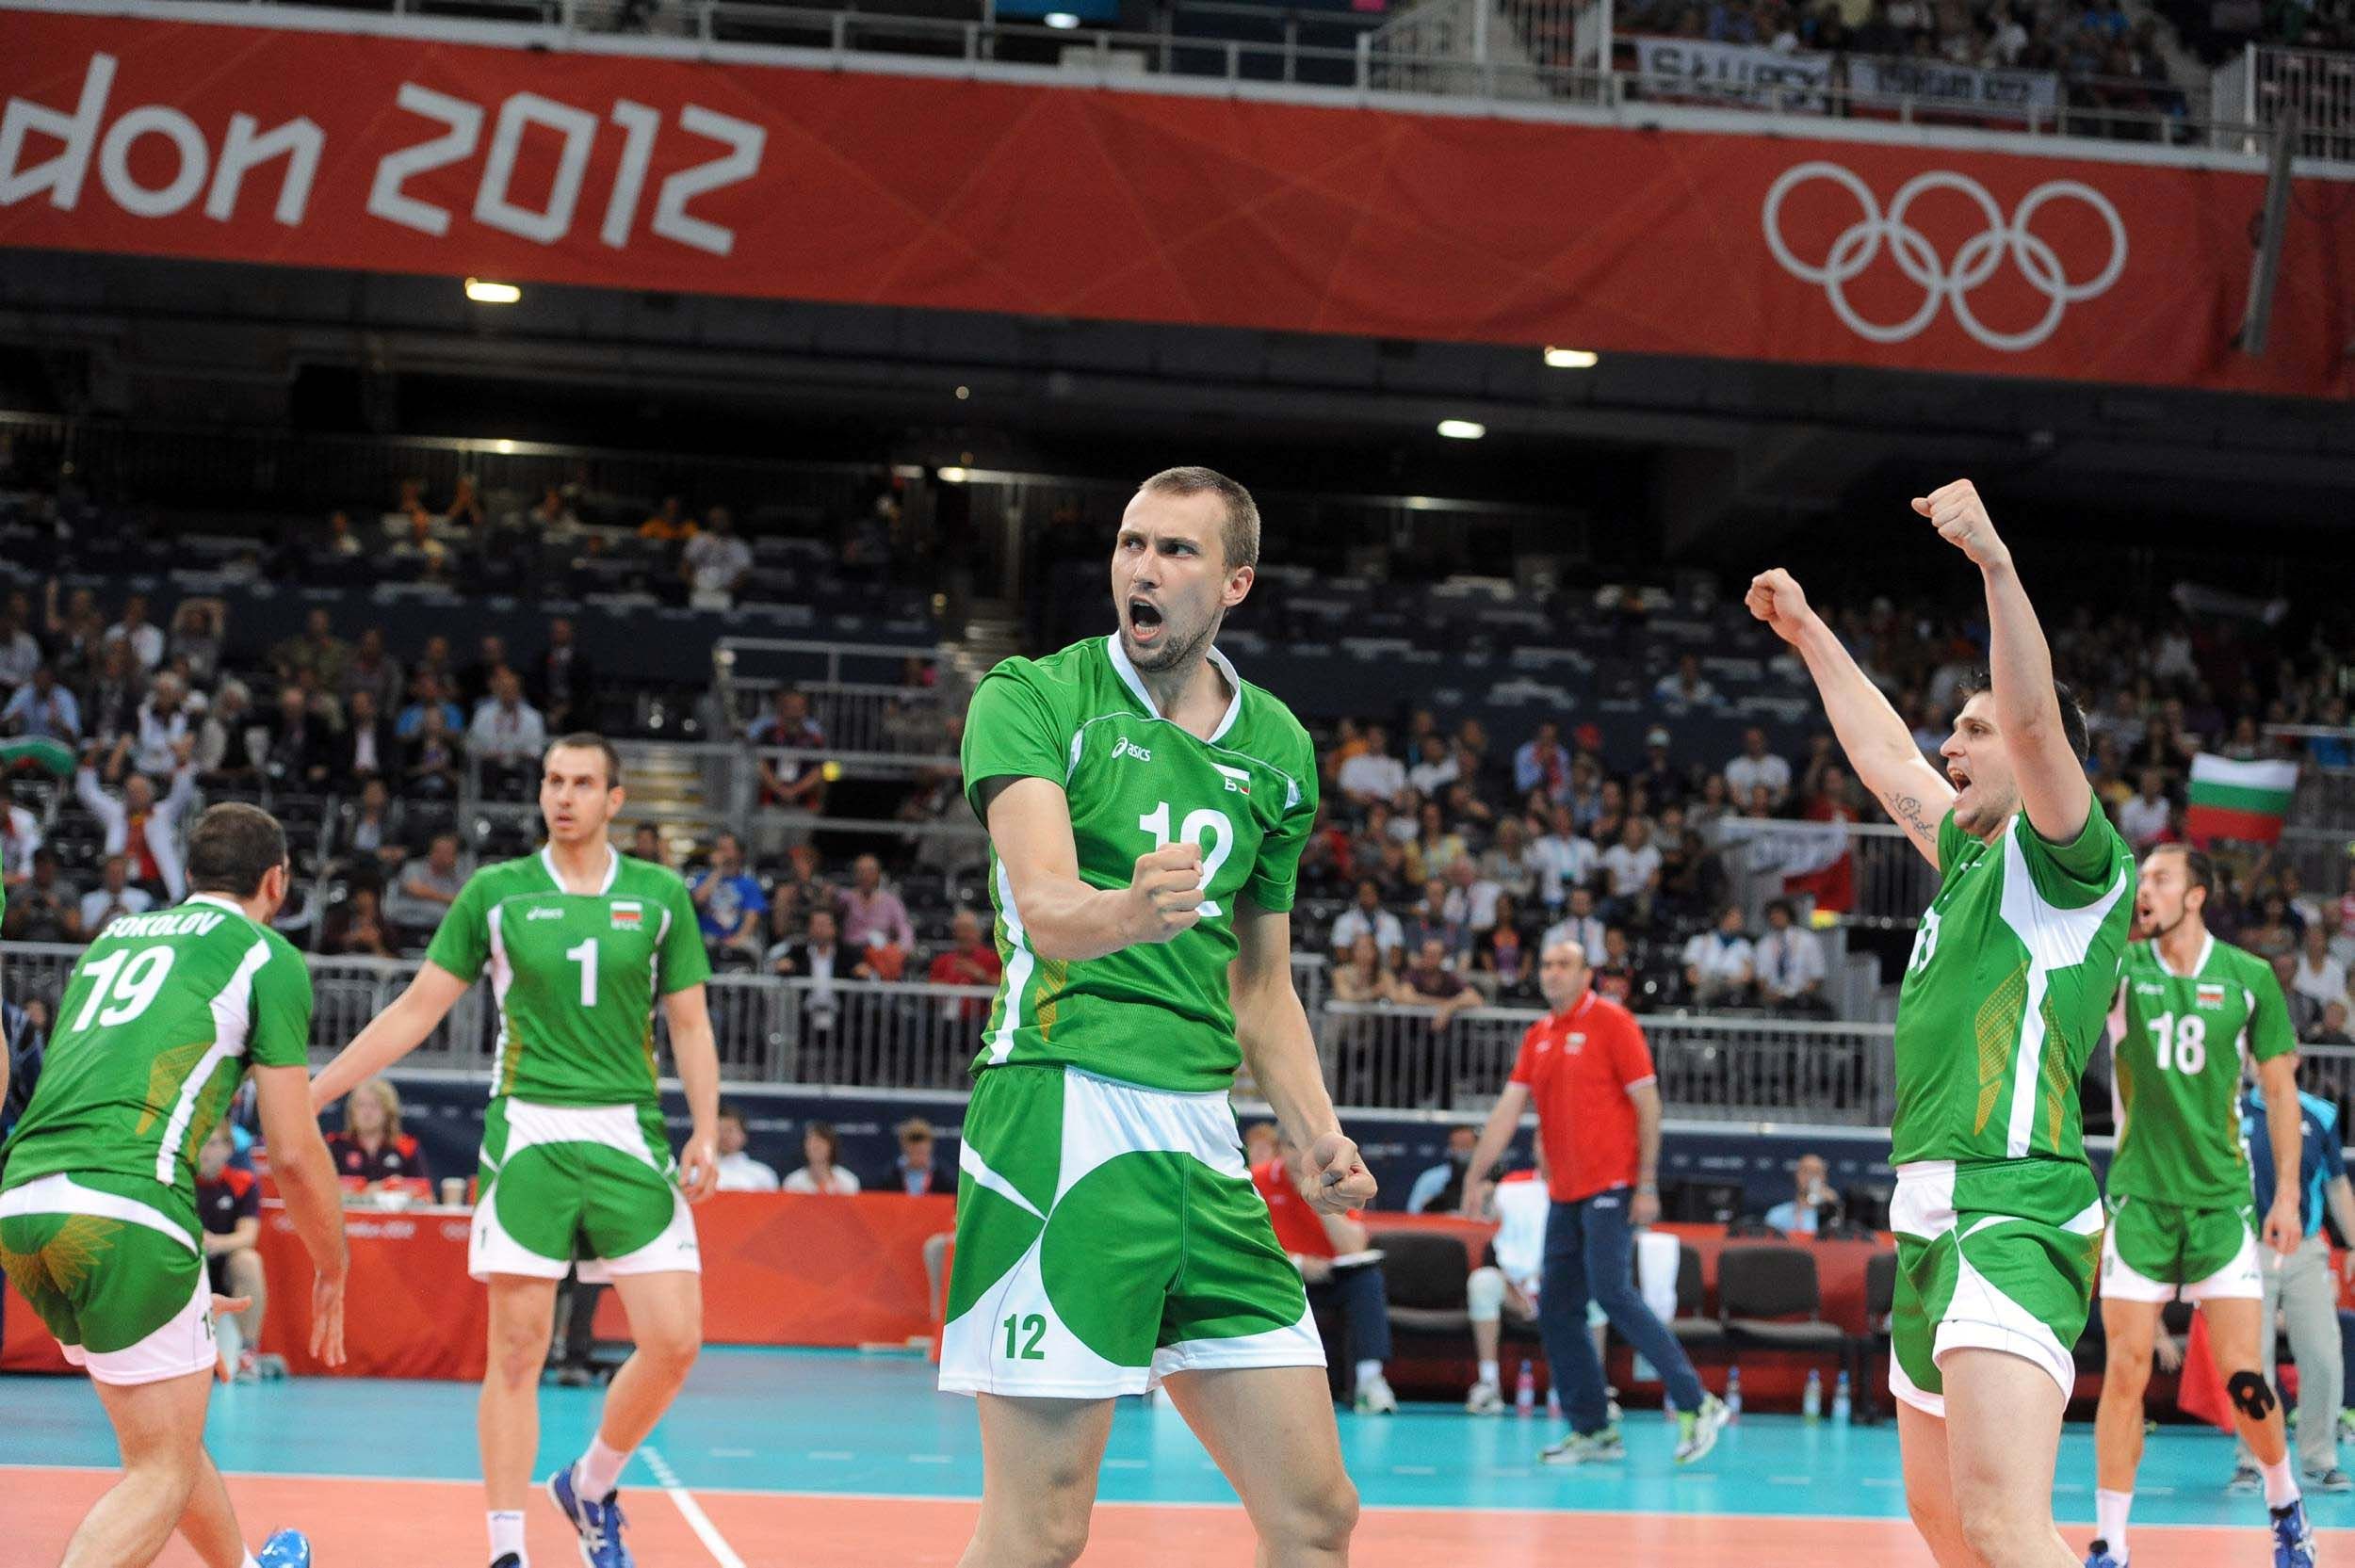 london 2012 bulgaria volleyball - Google Търсене | Bulgaria ...